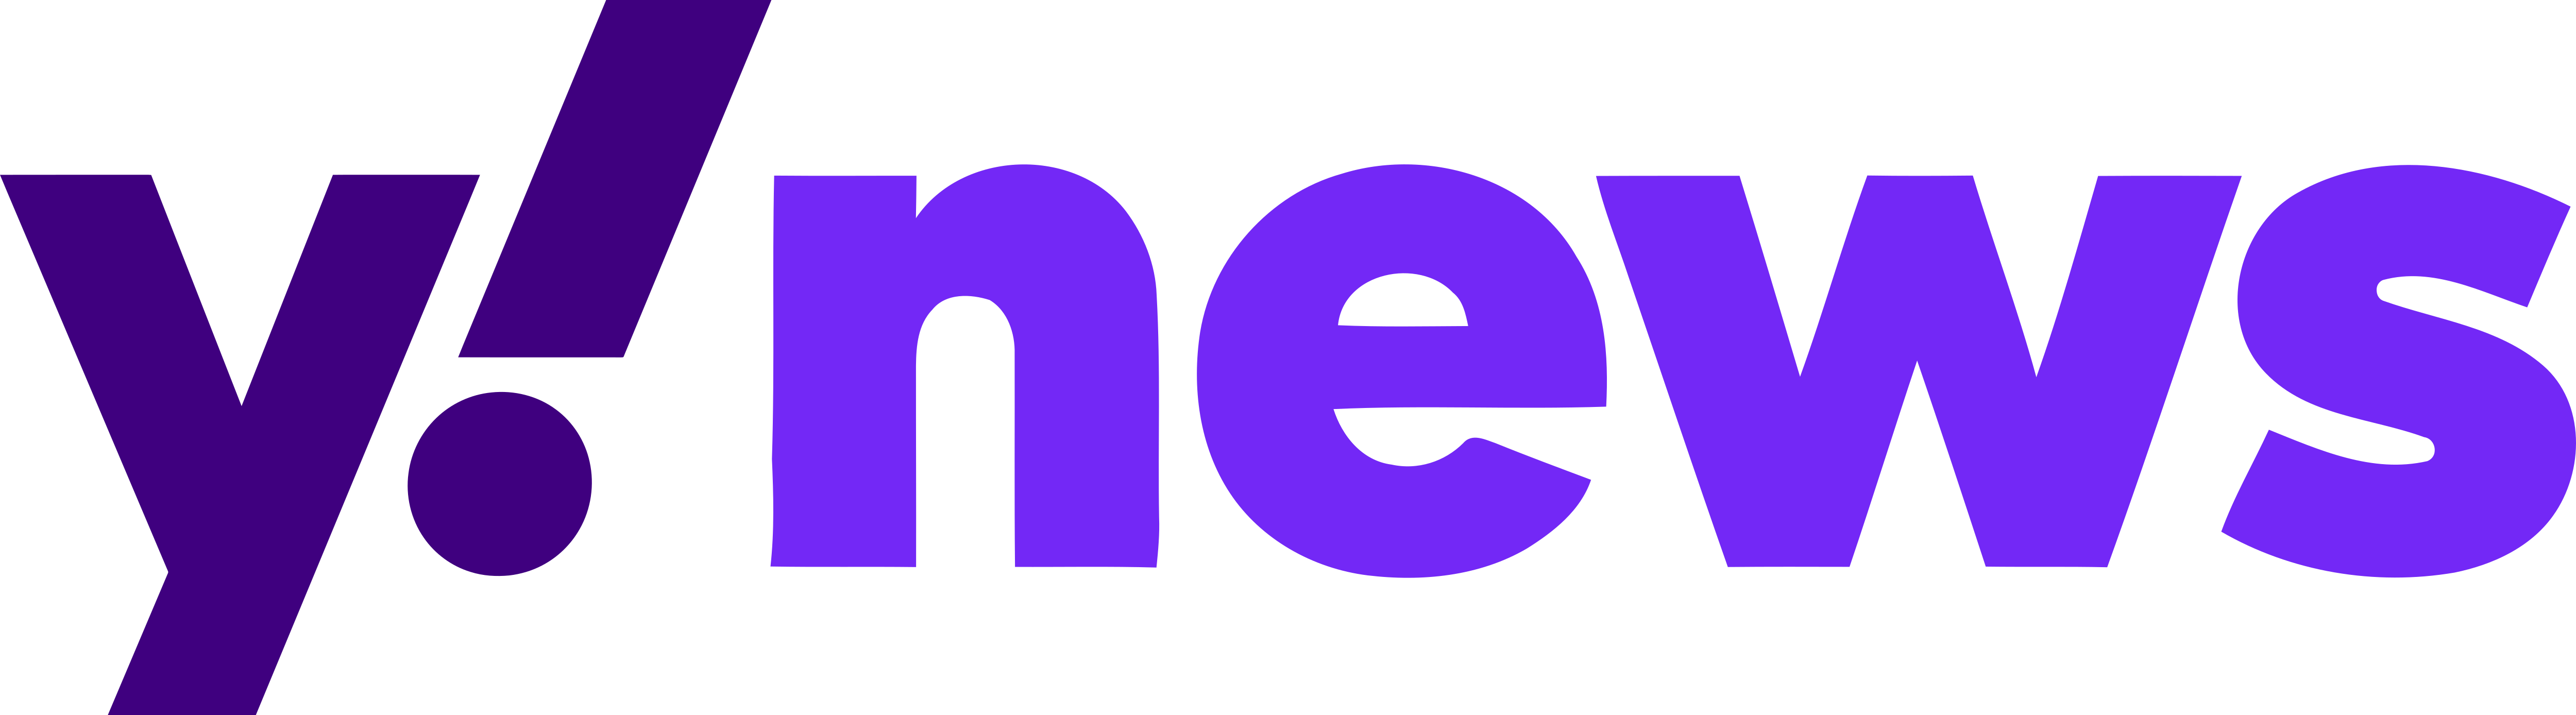 Yahoo News Logos Download